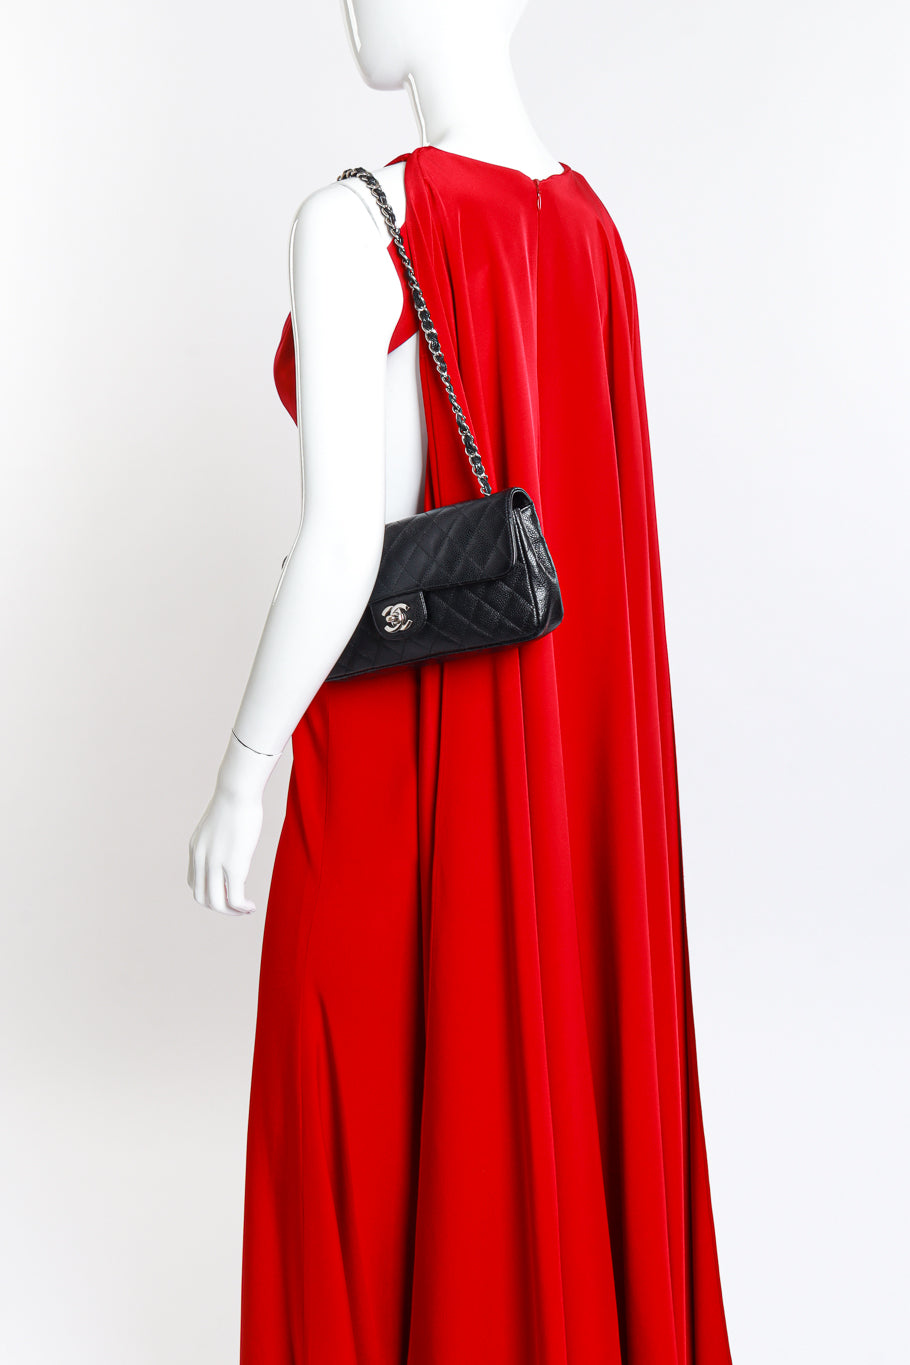 Chanel Classique Diamond Quilted Bag worn on mannequin @RECESS LA